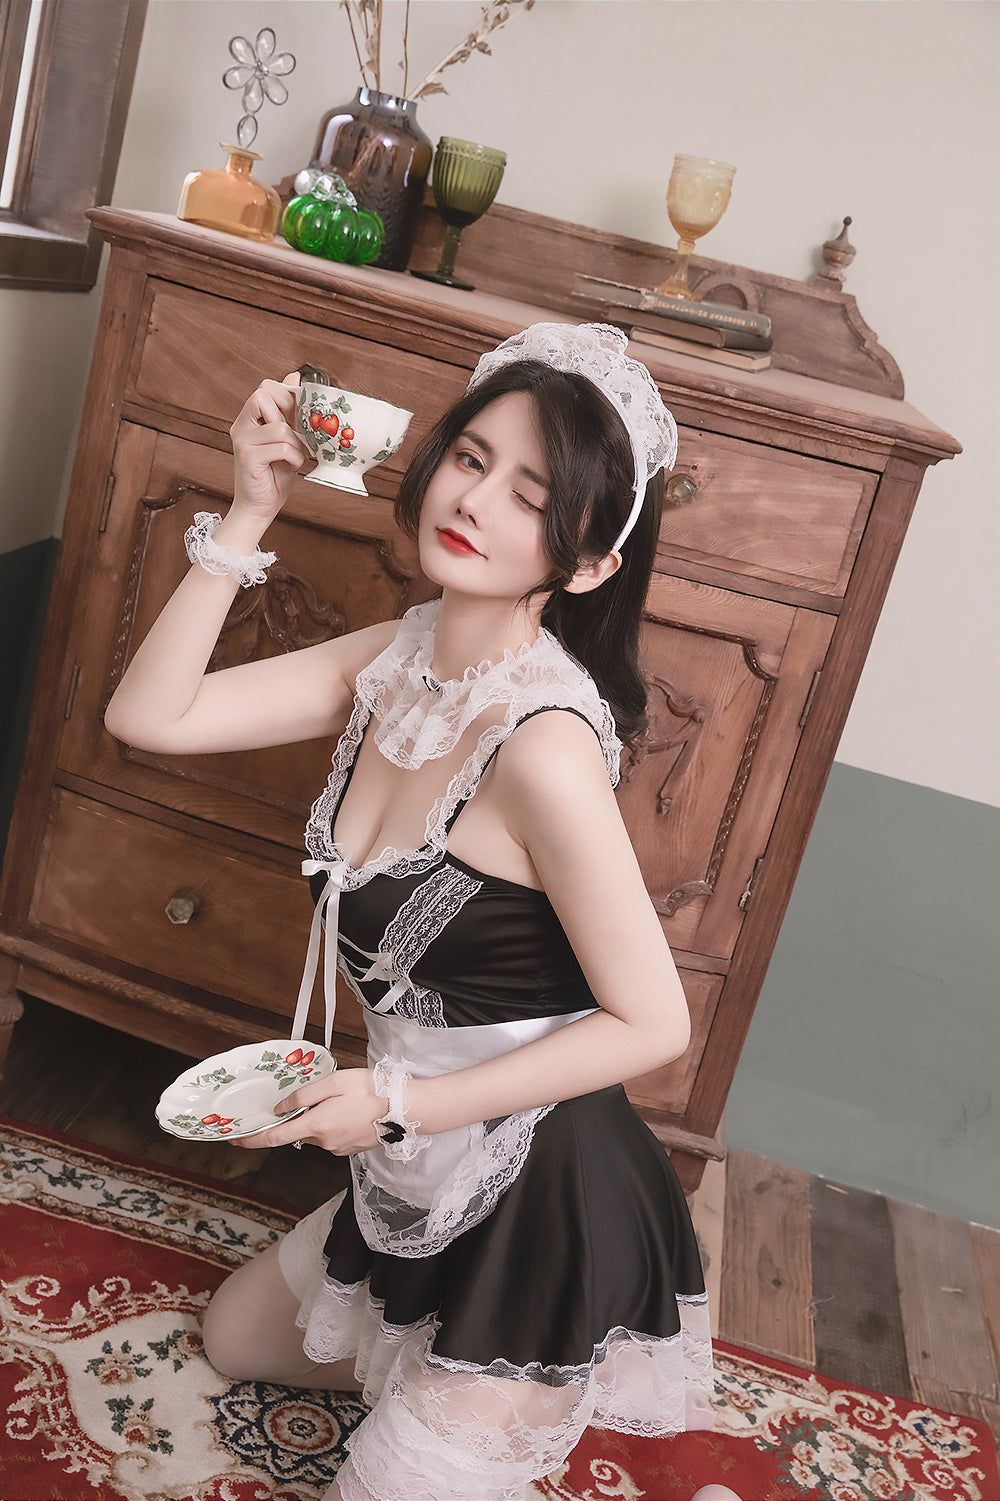 Erotic Servant Maid Dress - SCD055